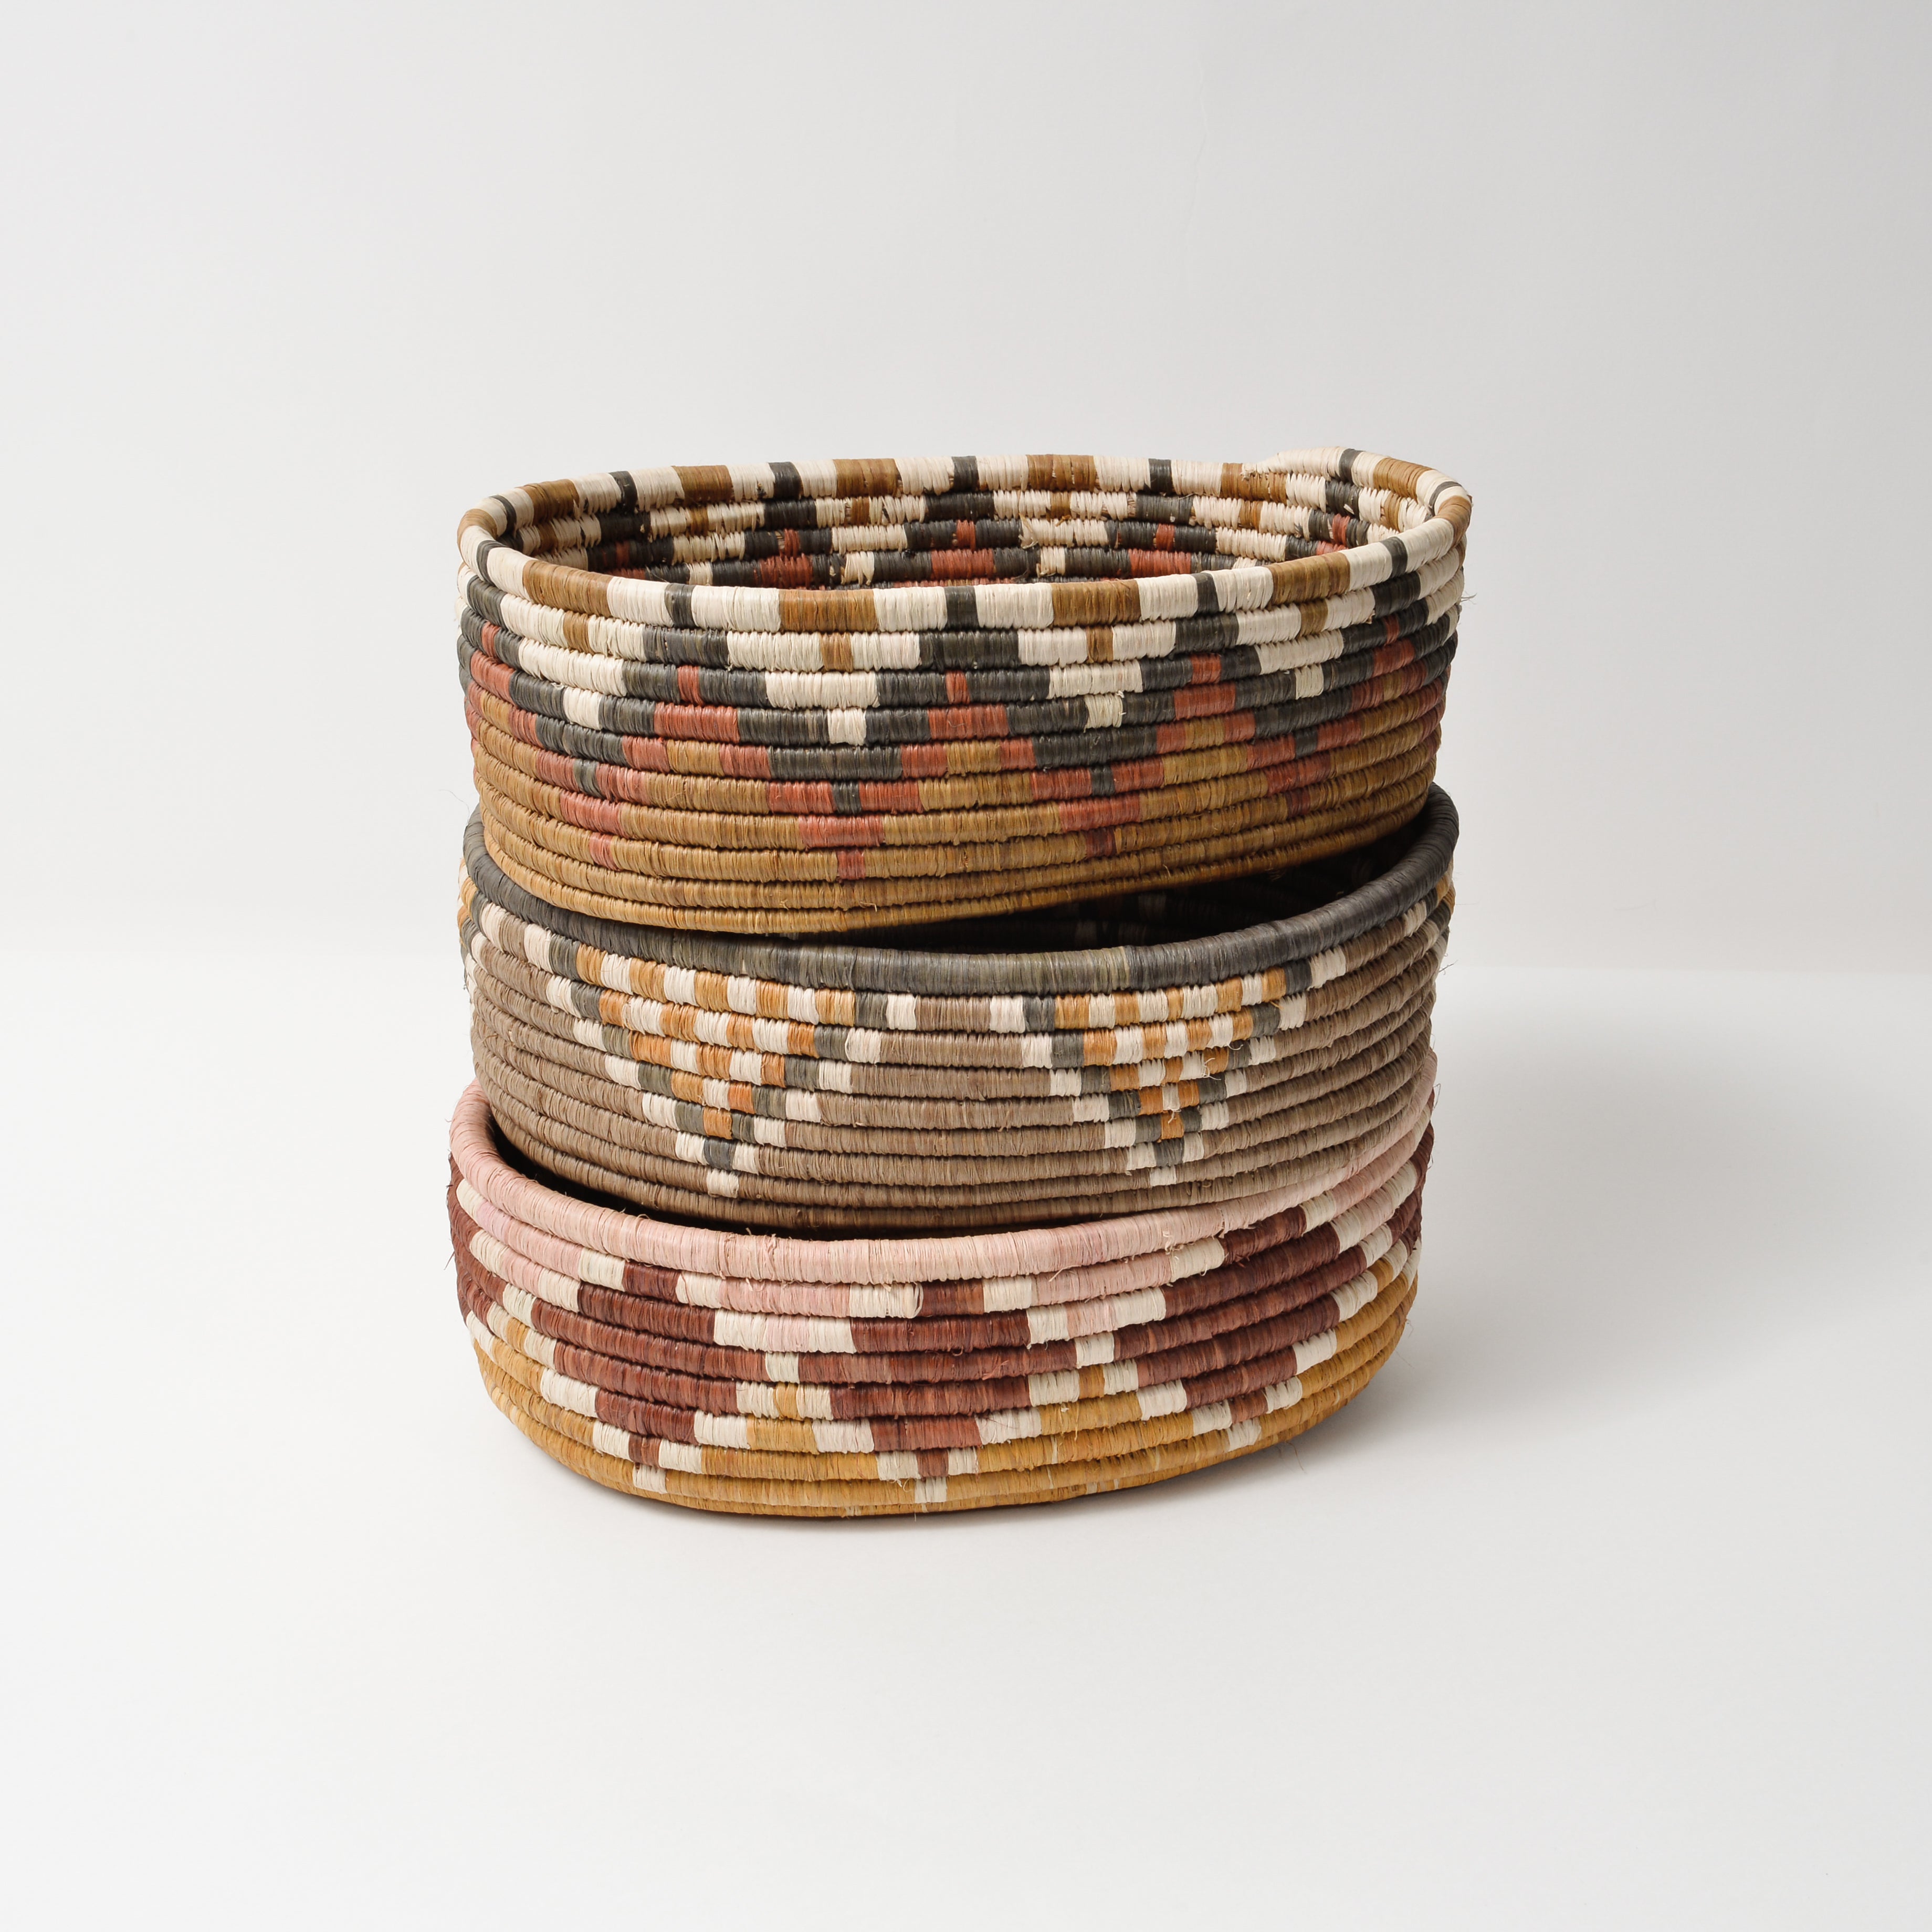 Small Arrows Bread Basket ~ Harmony Collection